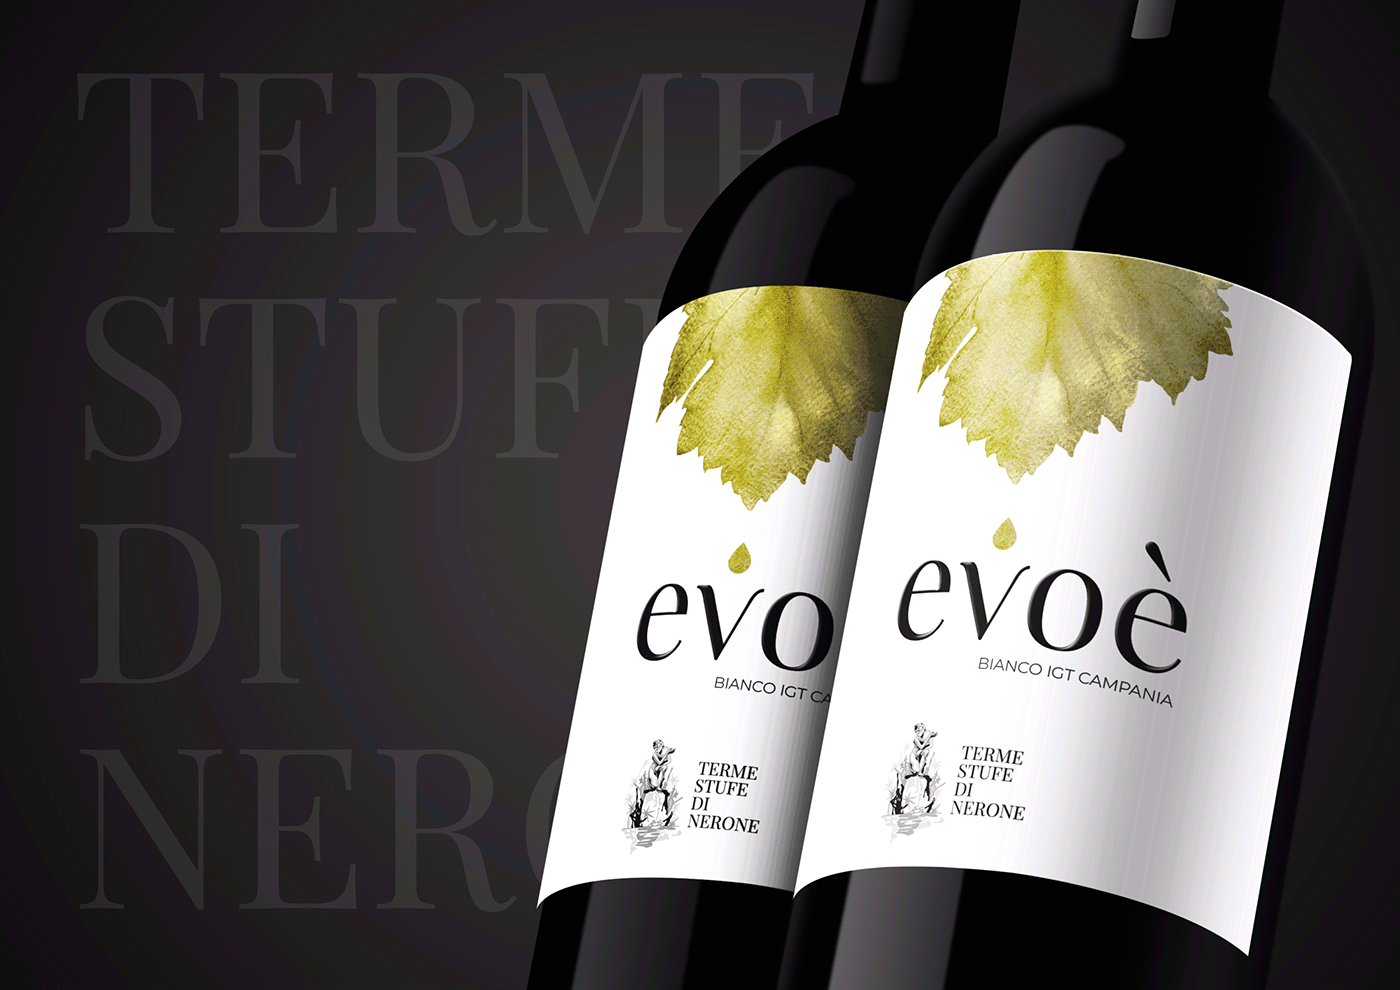 alterodesign grahic graphic design  Label labeling wine wine label